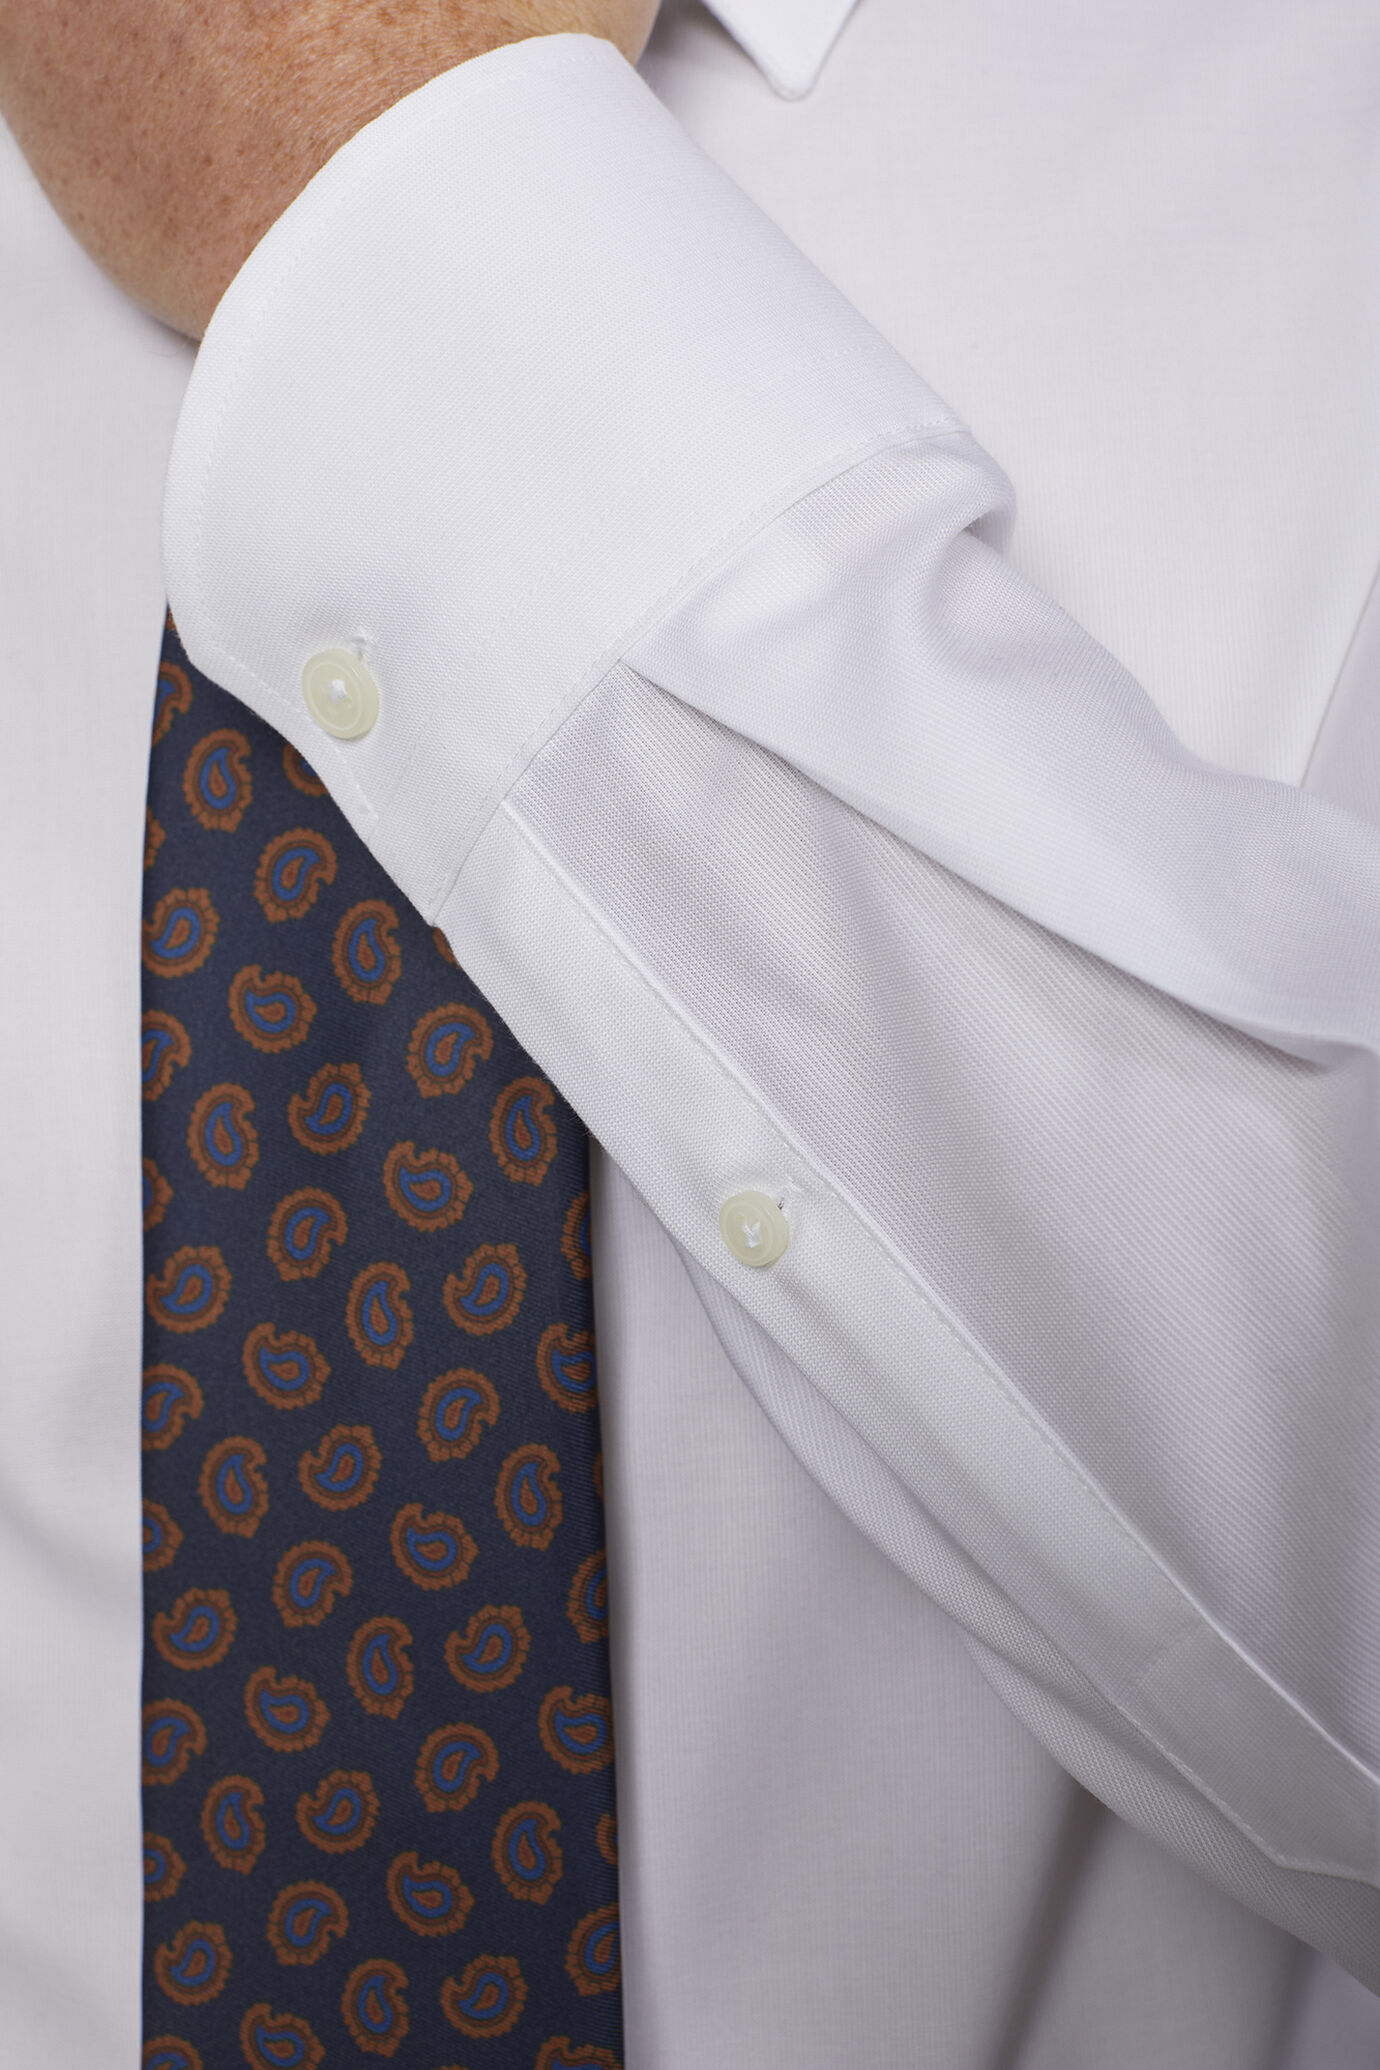 Men's shirt classic collar 100% cotton pinpoint fabric plain regualr fit image number 4